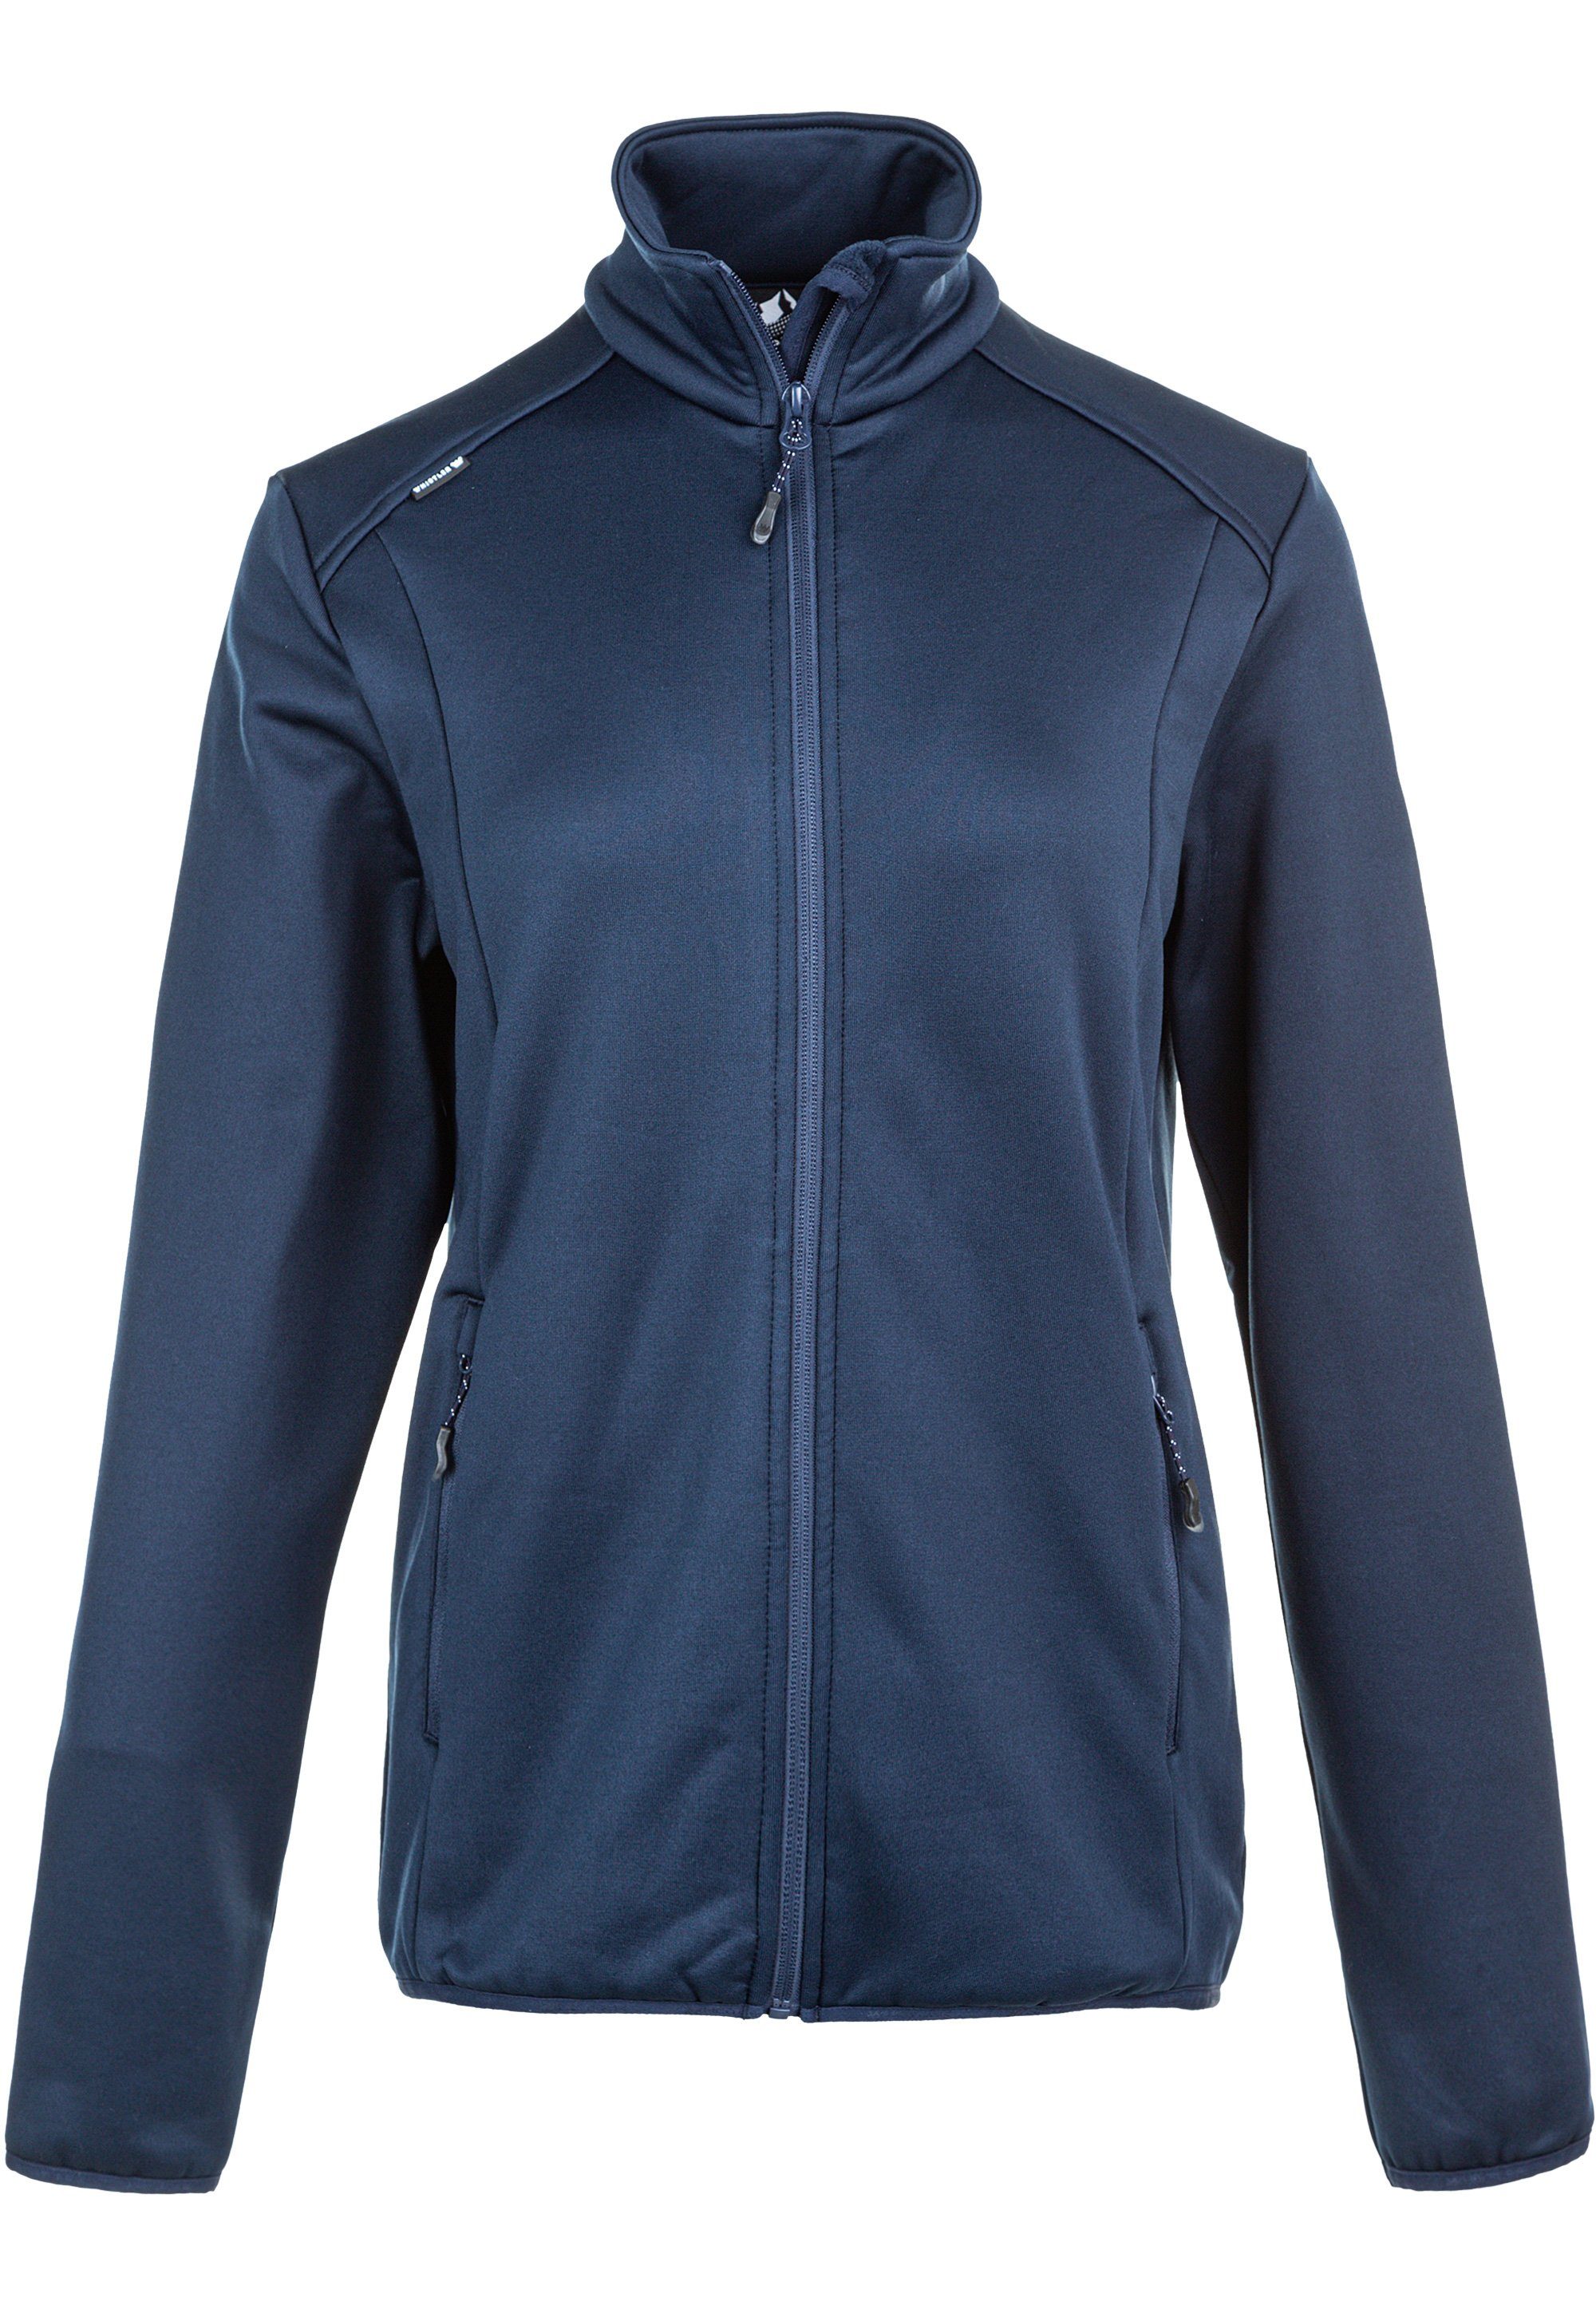 W Fleecejacke WHISTLER hochwertigem Funktionsstretch dunkelblau mit Powerstretch ZENSA Jacket fleece